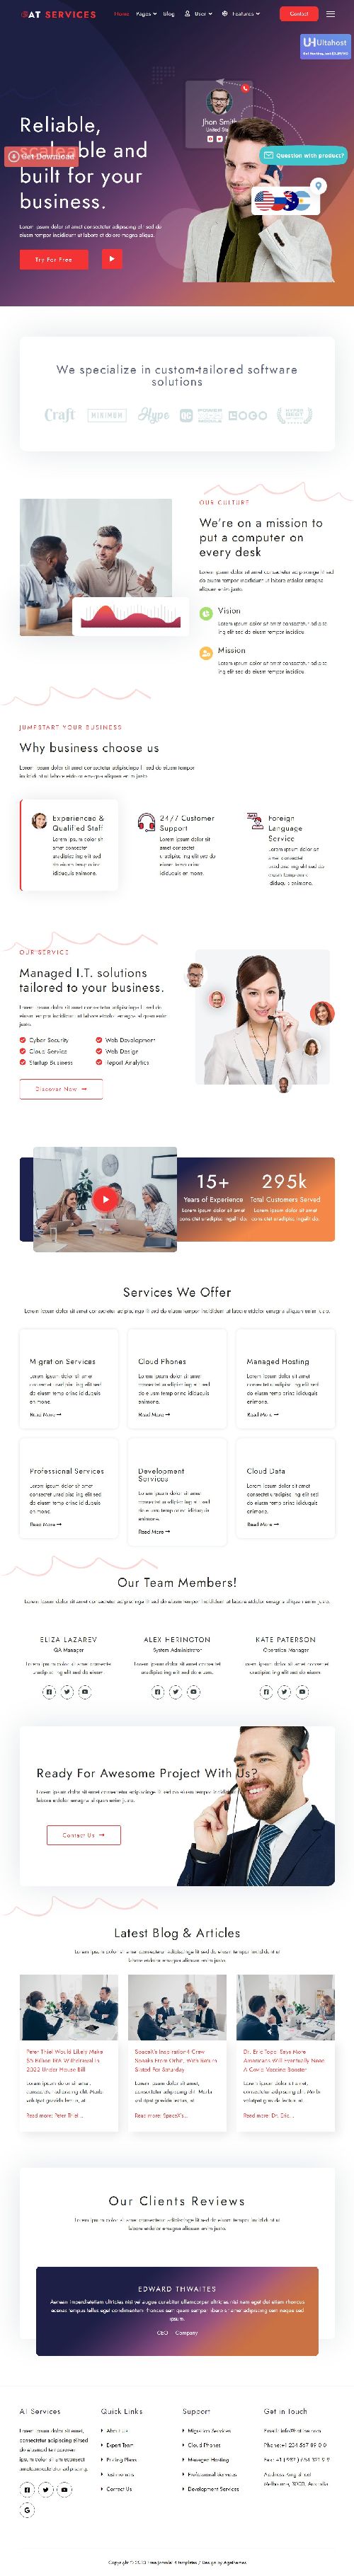 Services - Business & Services Joomla 4 Template Website